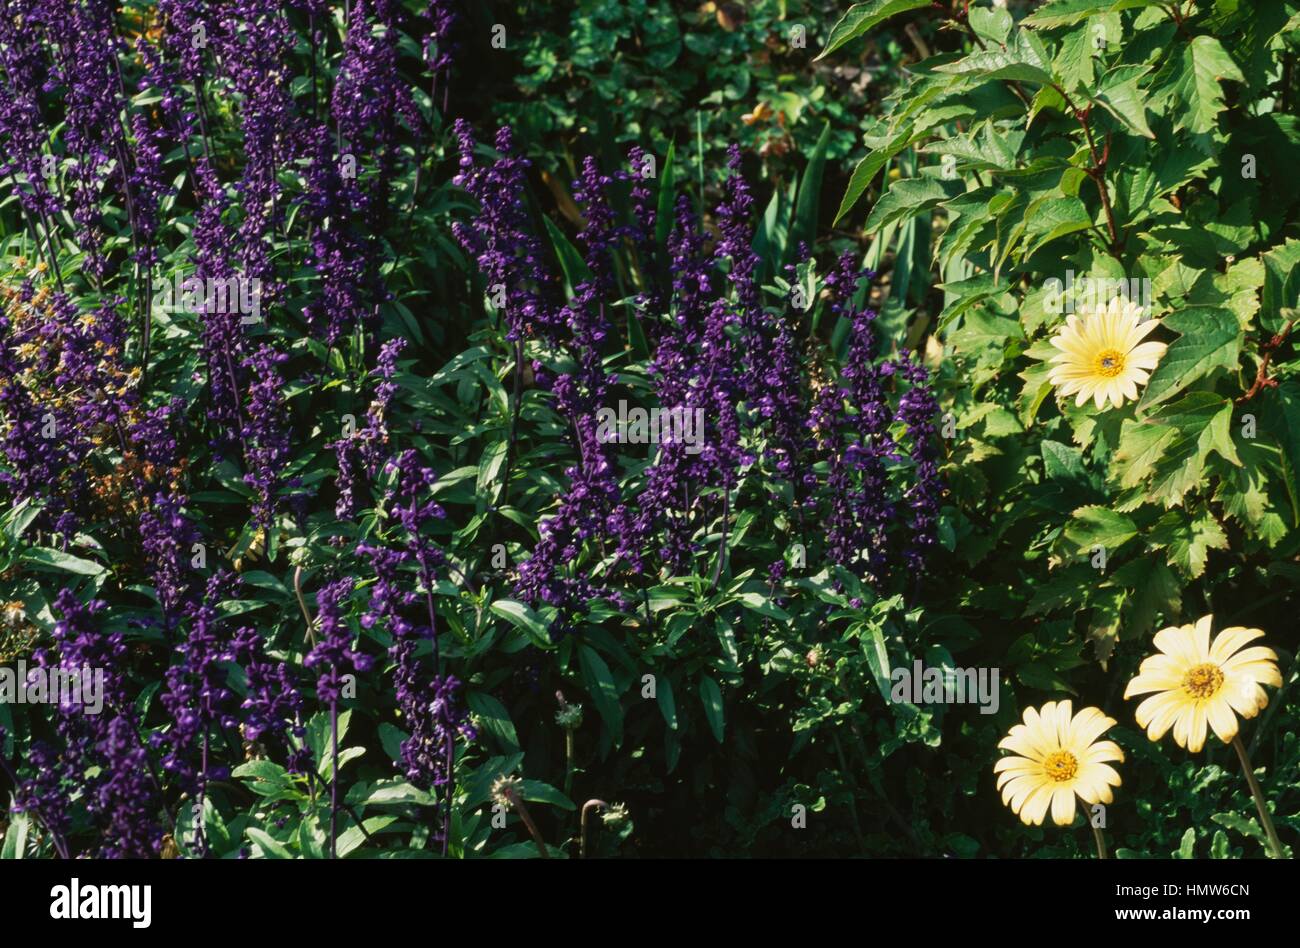 Mealycup sage in bloom (Salvia farinacea Victoria Blue), Lamiaceae. Stock Photo